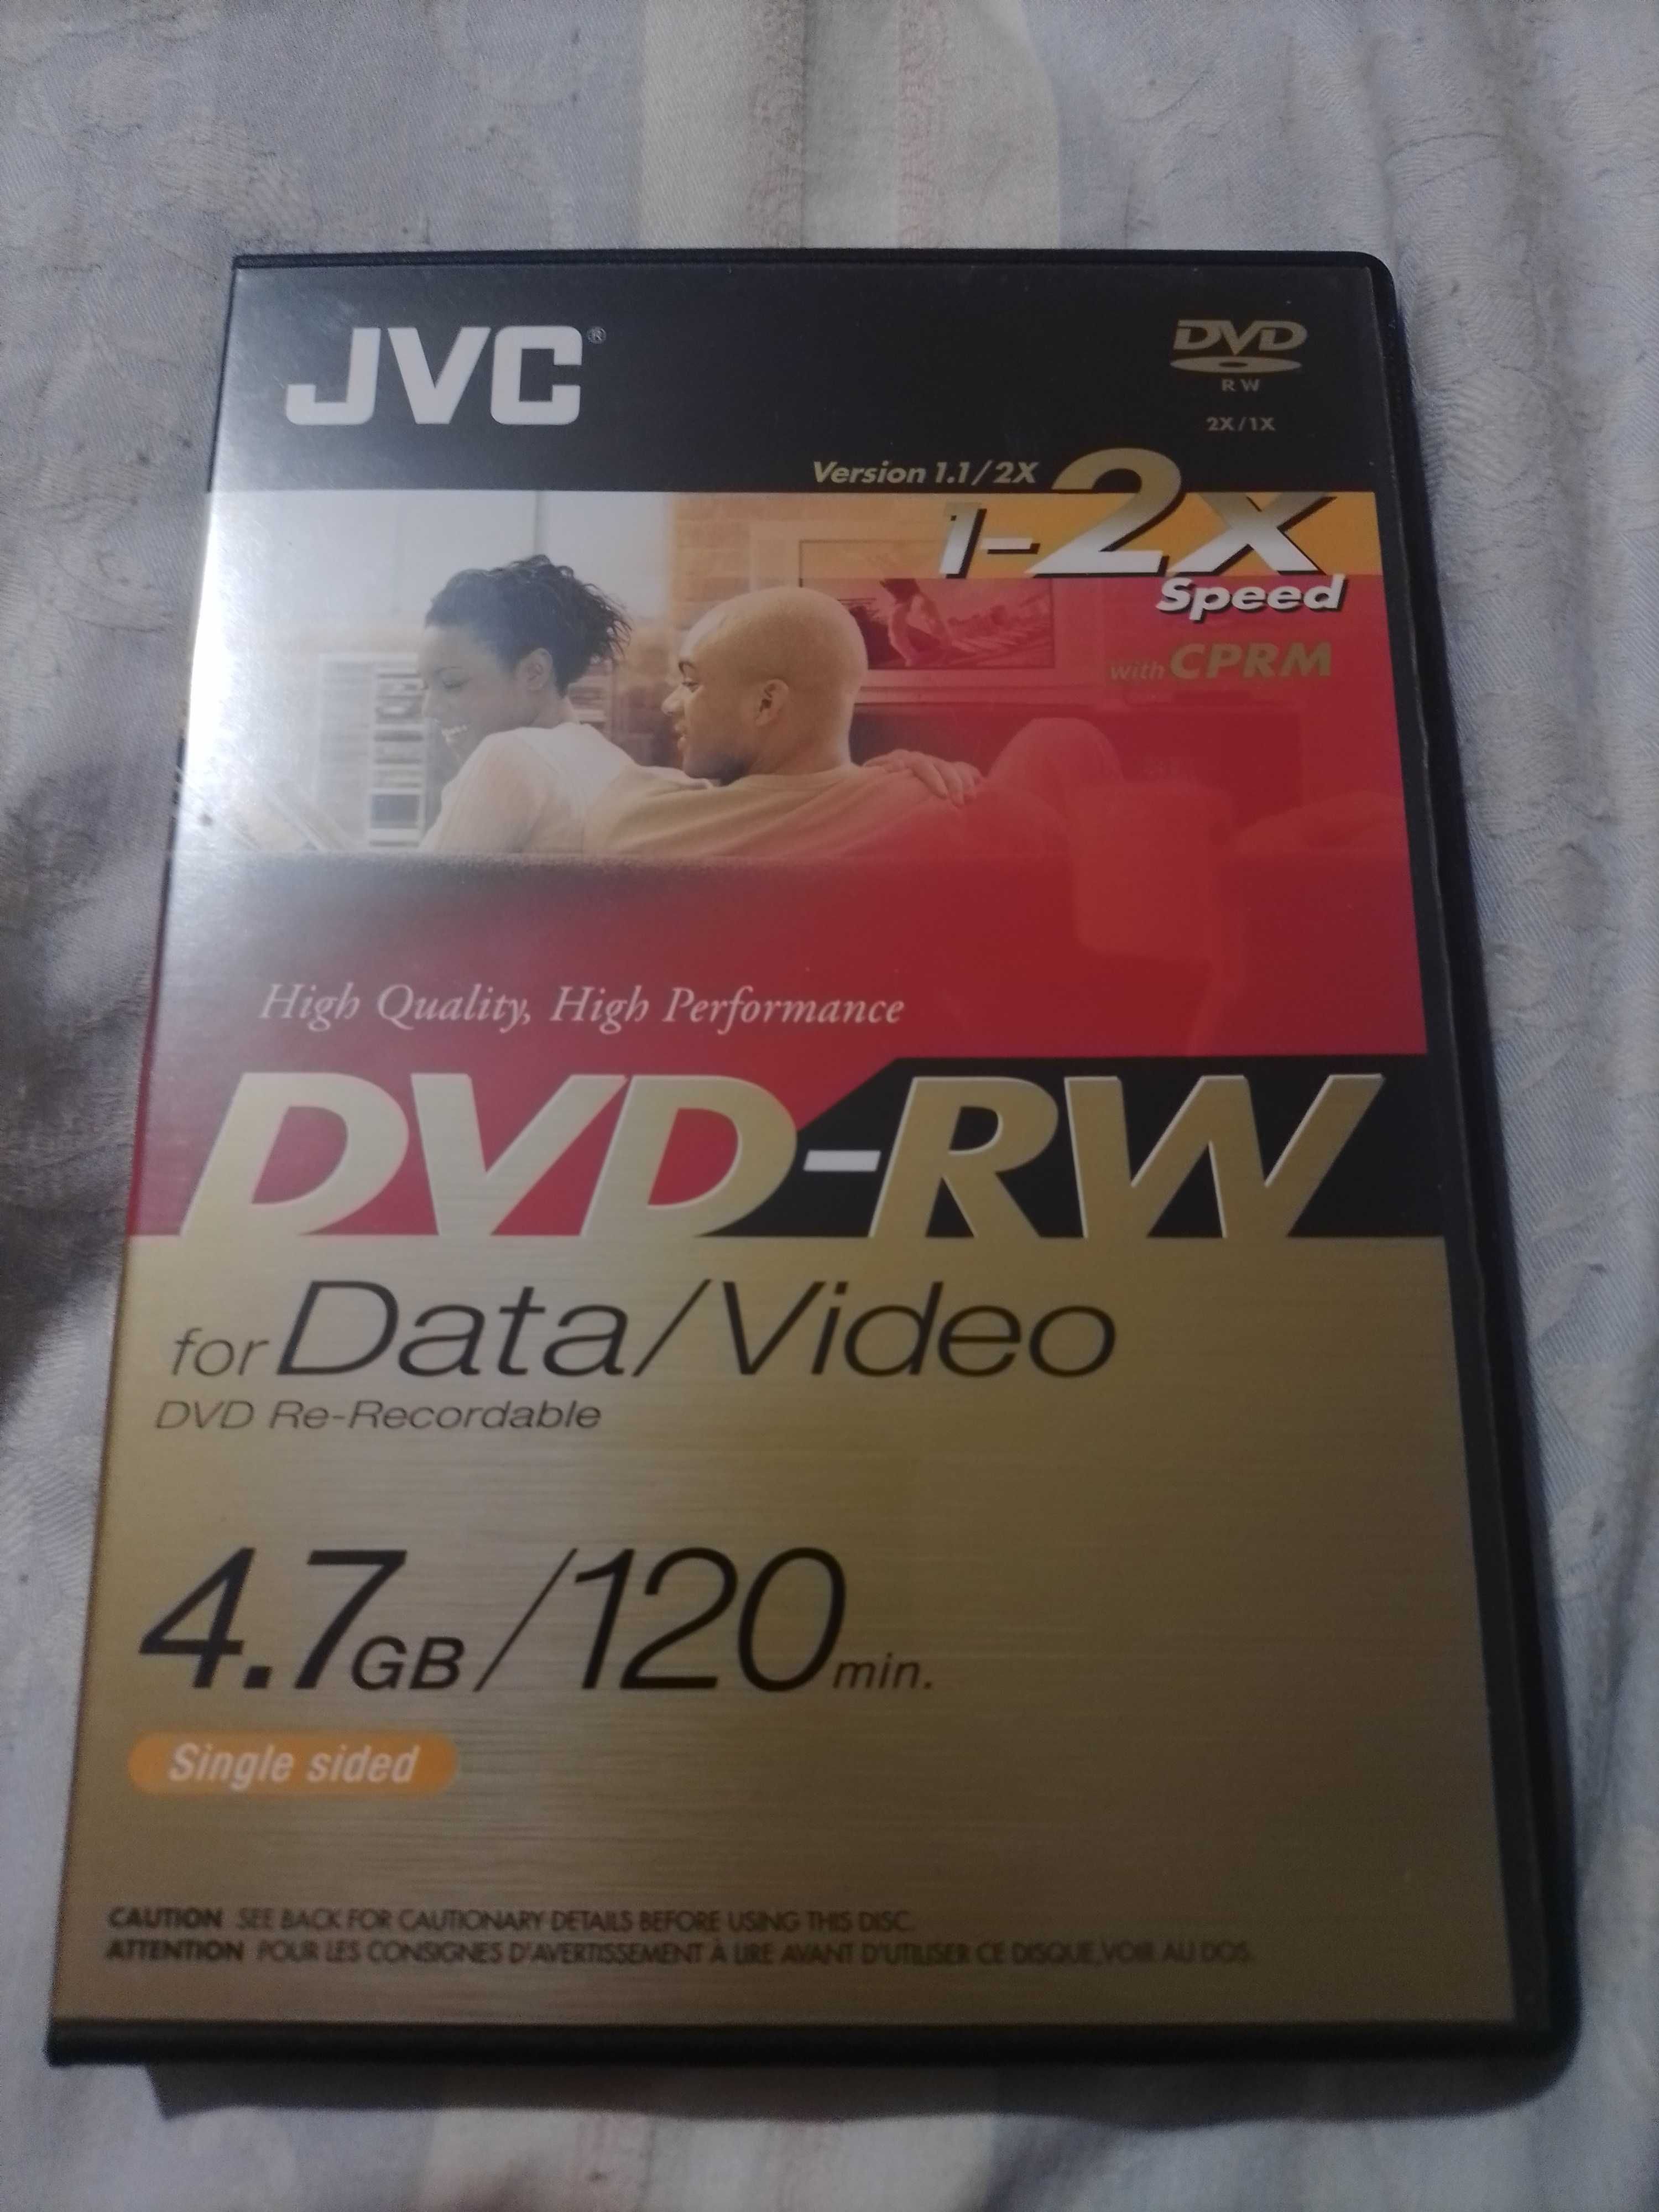 Диск JVC DVD-RW 120min 4.7GB Version 1.1/2X 1-2X Speed with CPRM